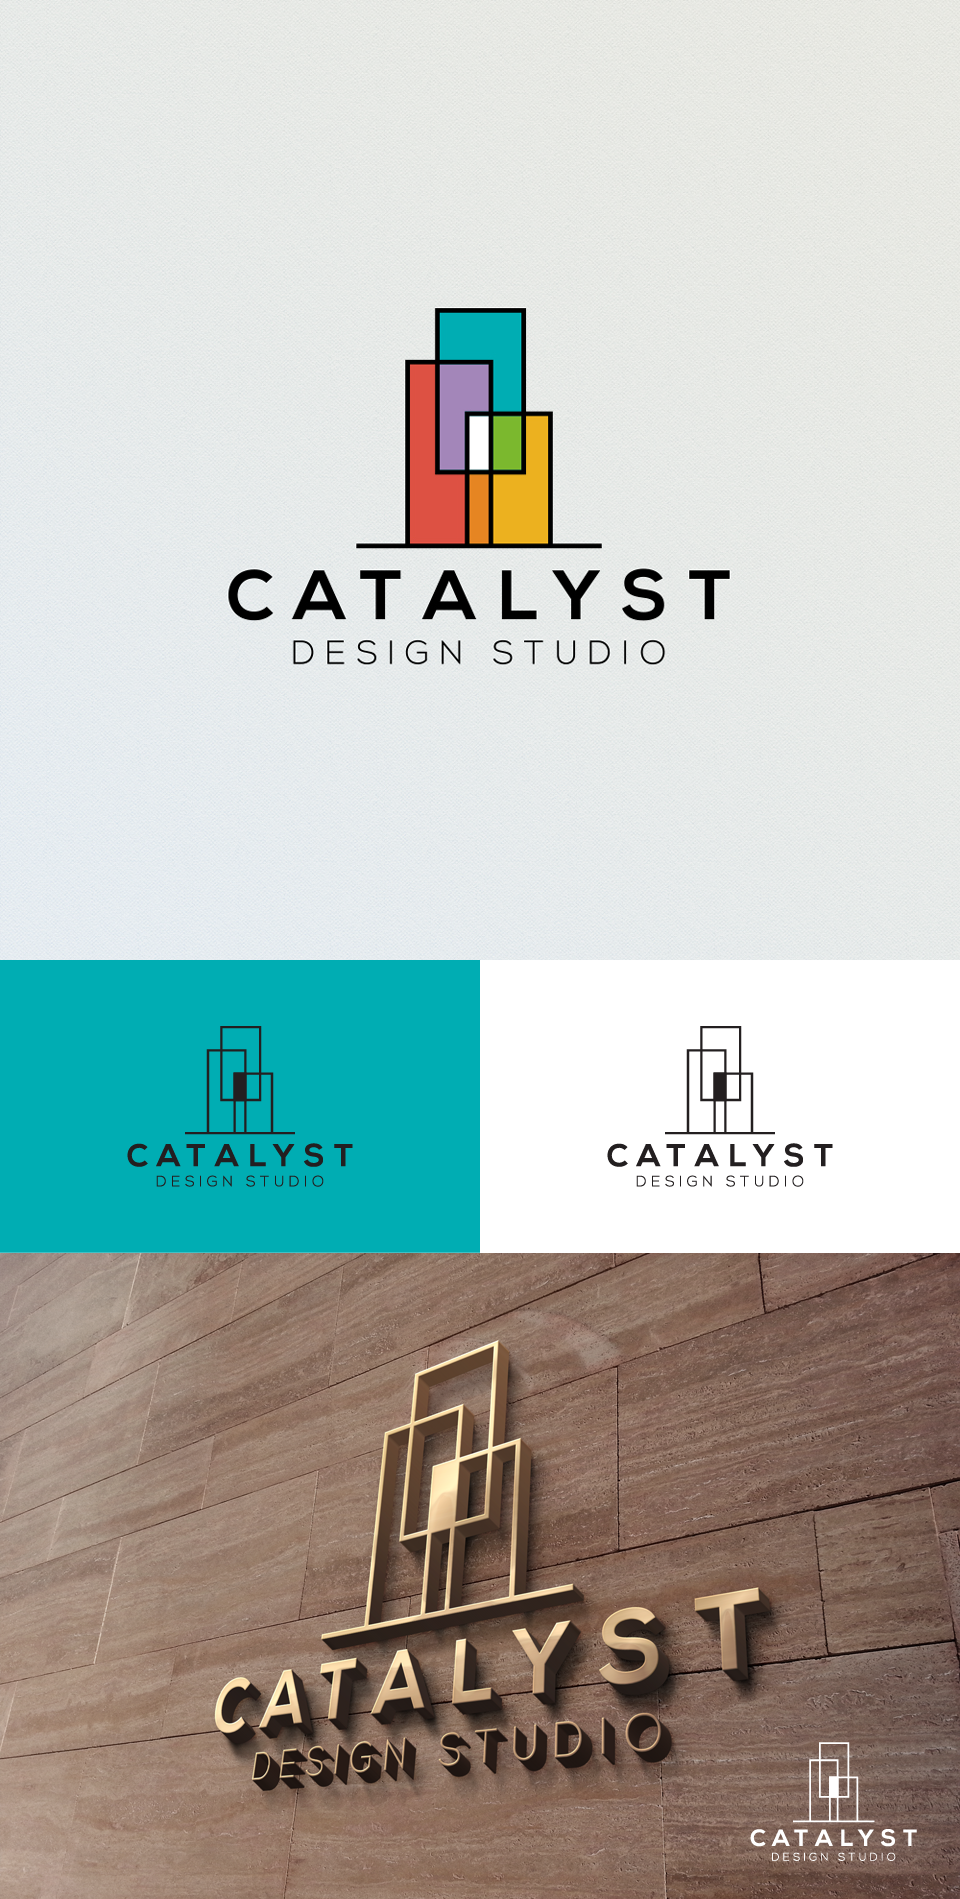 image of Catalyst logo